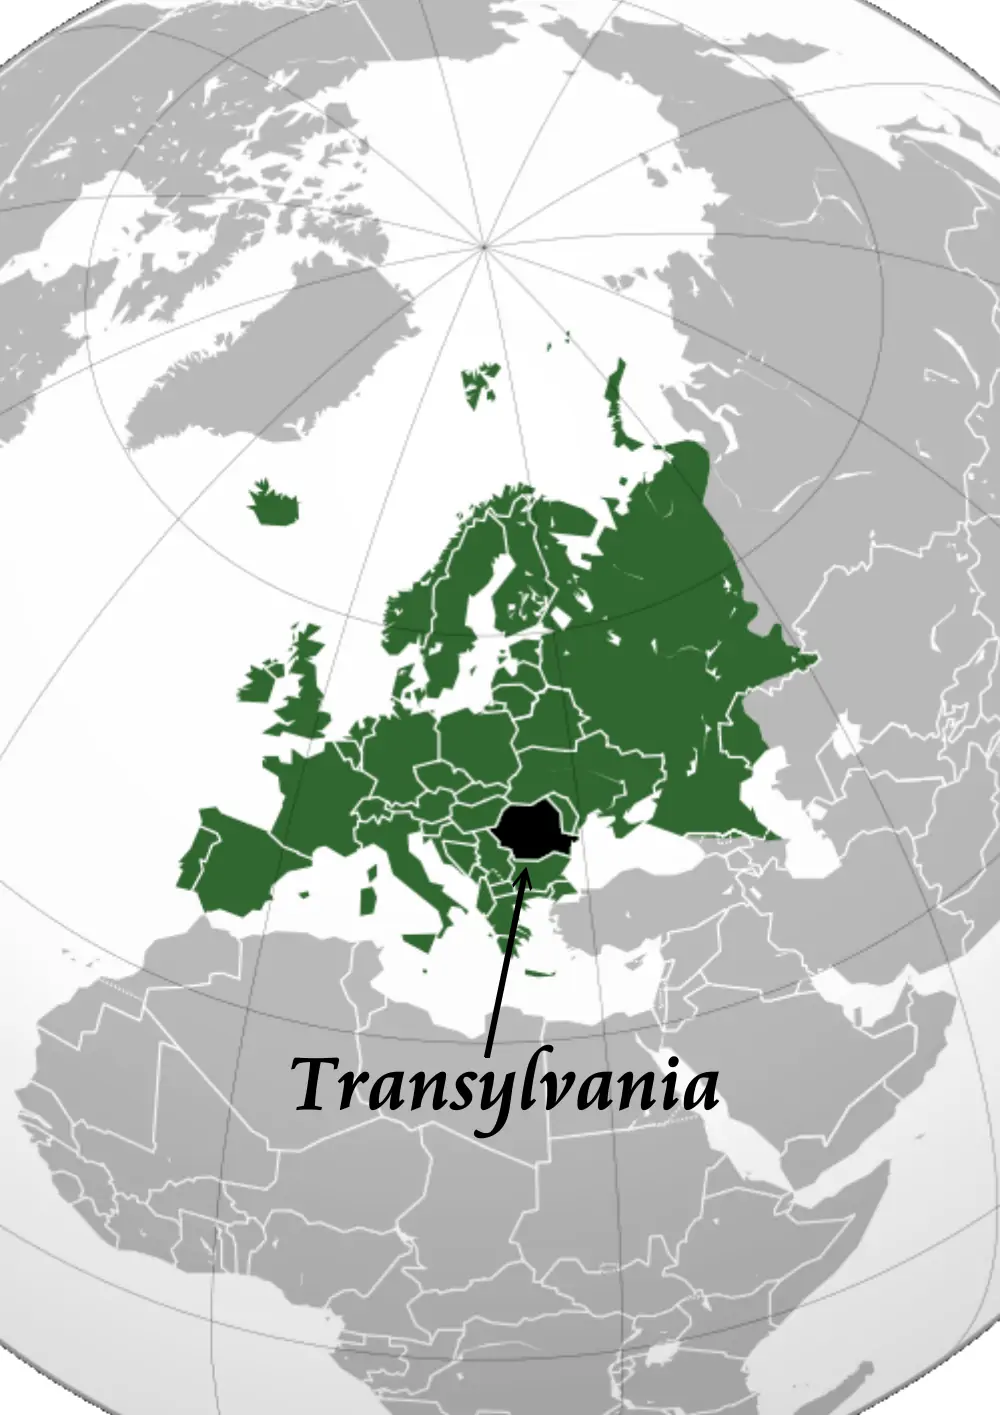 Transylvania on a world map